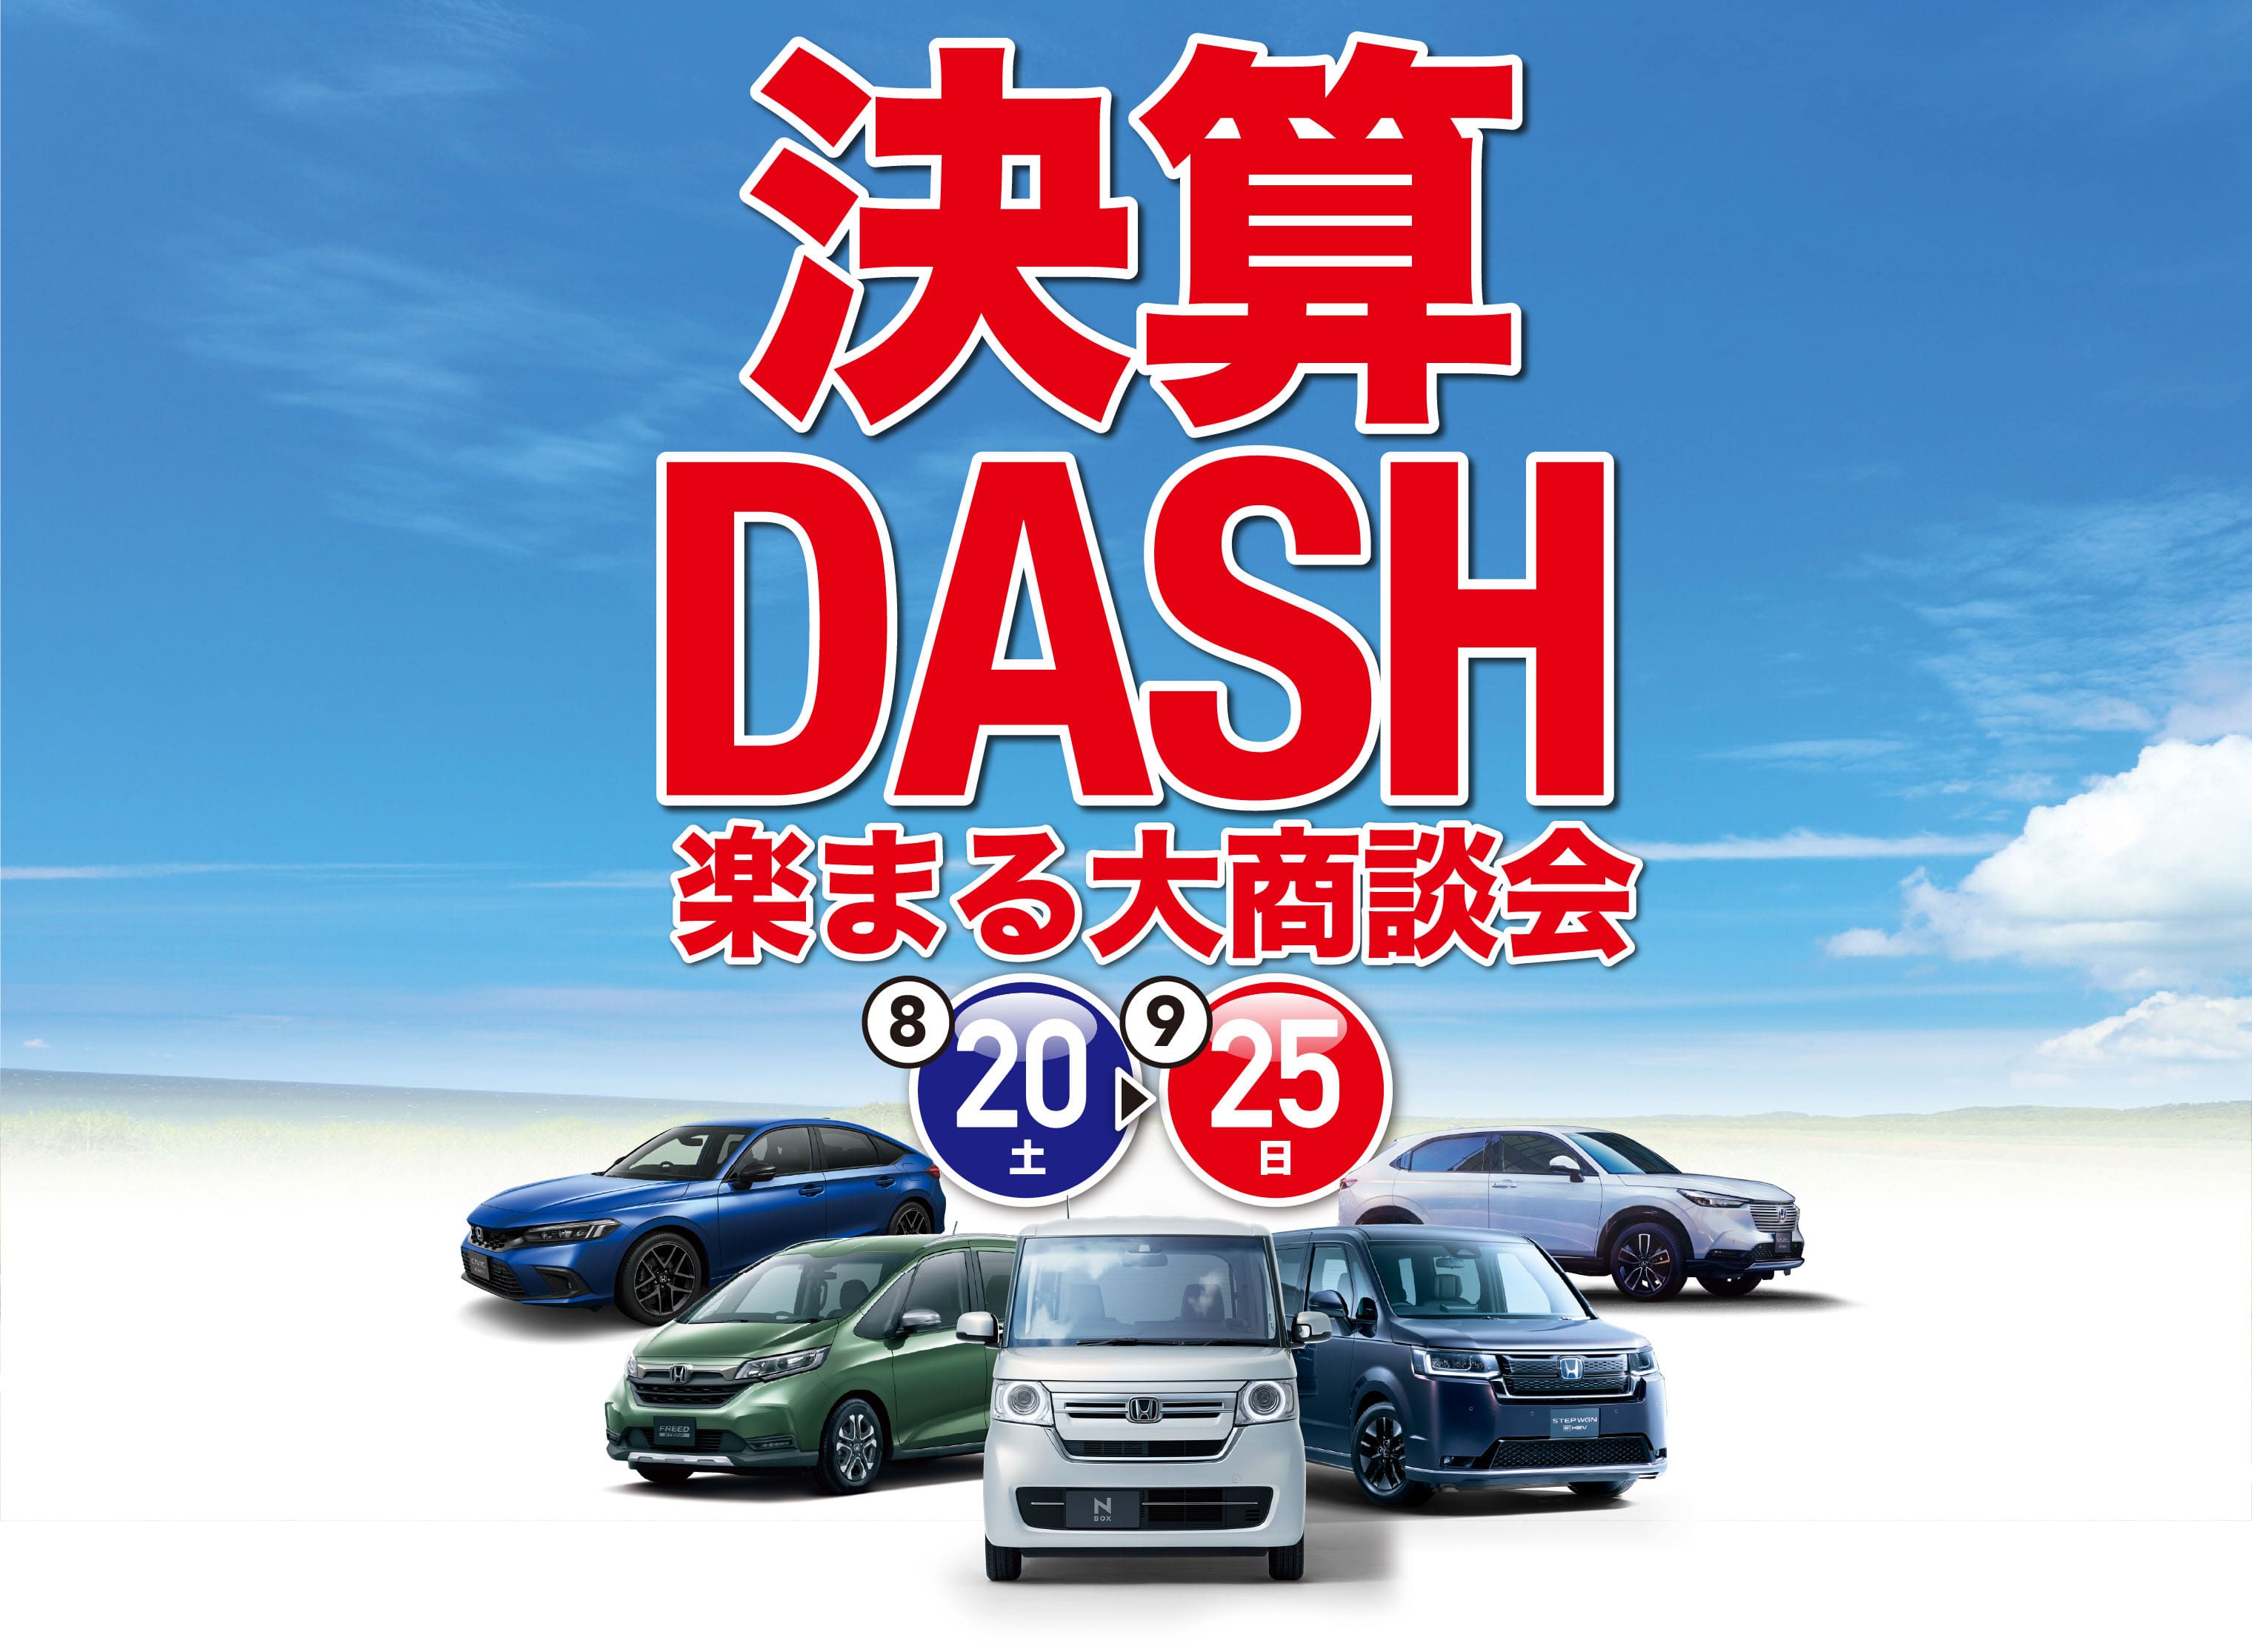 Honda Cars静岡西 決算DASH 楽まる大商談会 8.20（土）〜9.25（日）